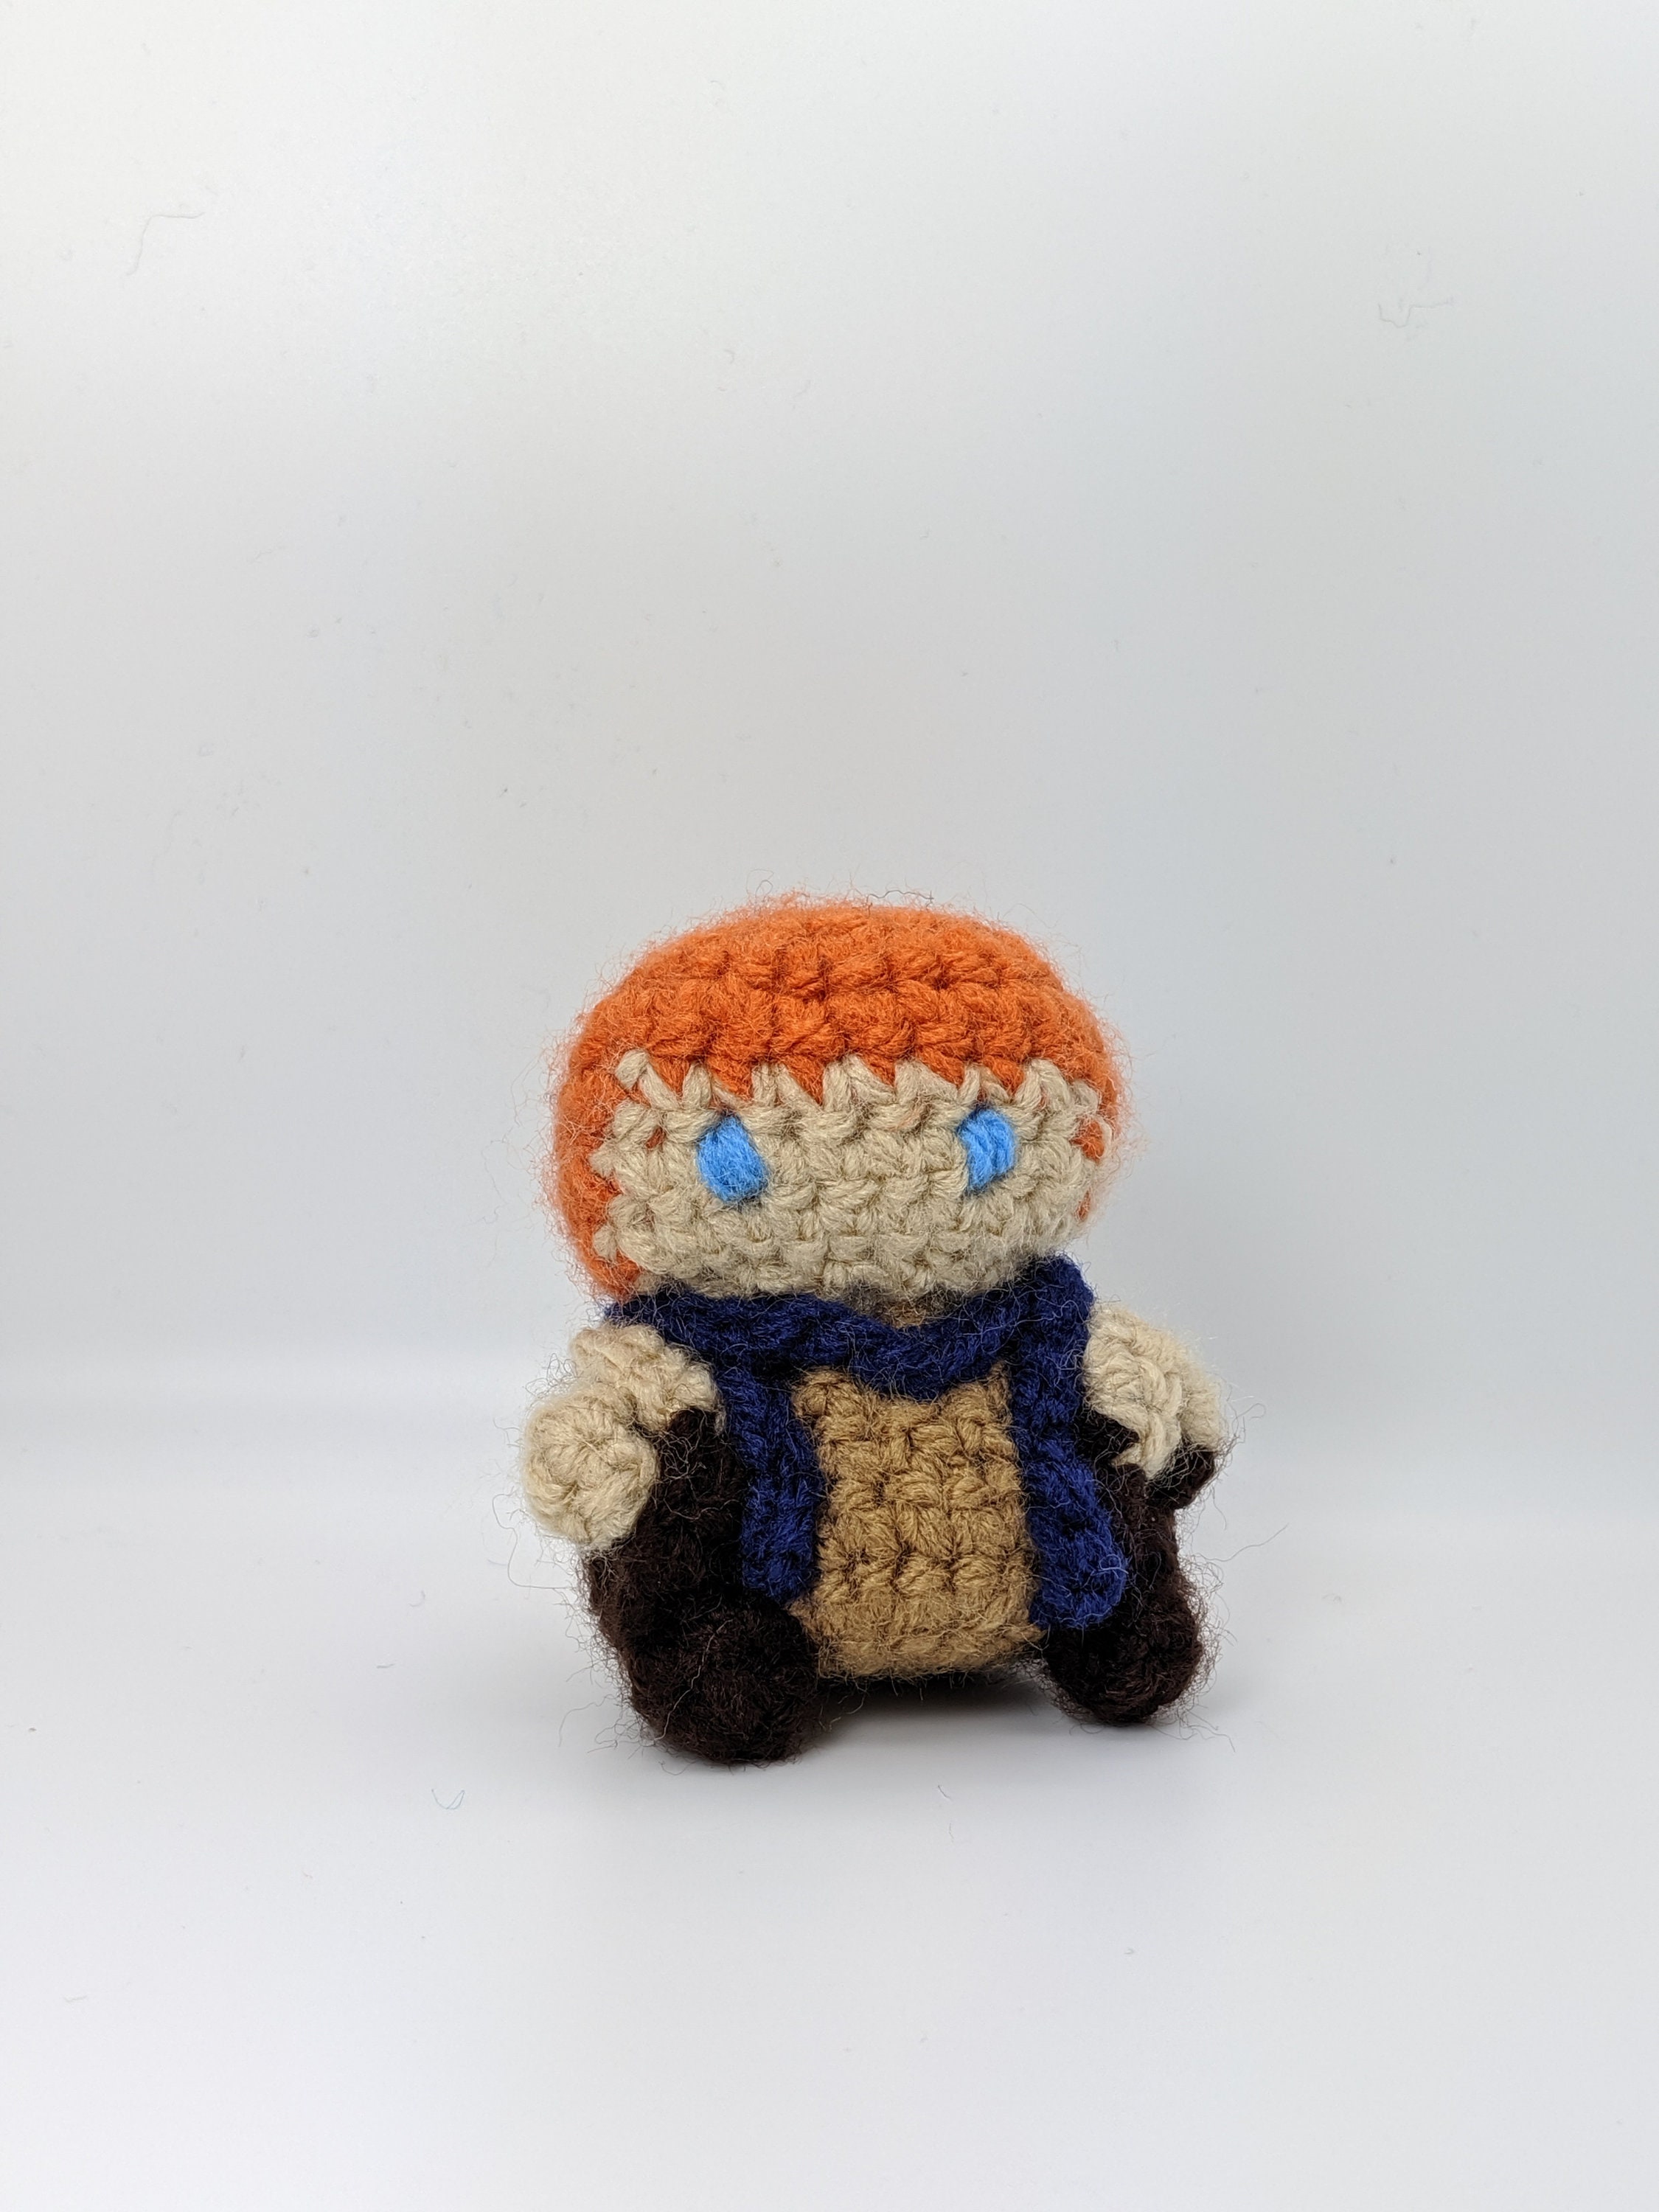 Crochet Critical Role Mighty Nein Inspired Amigurumi